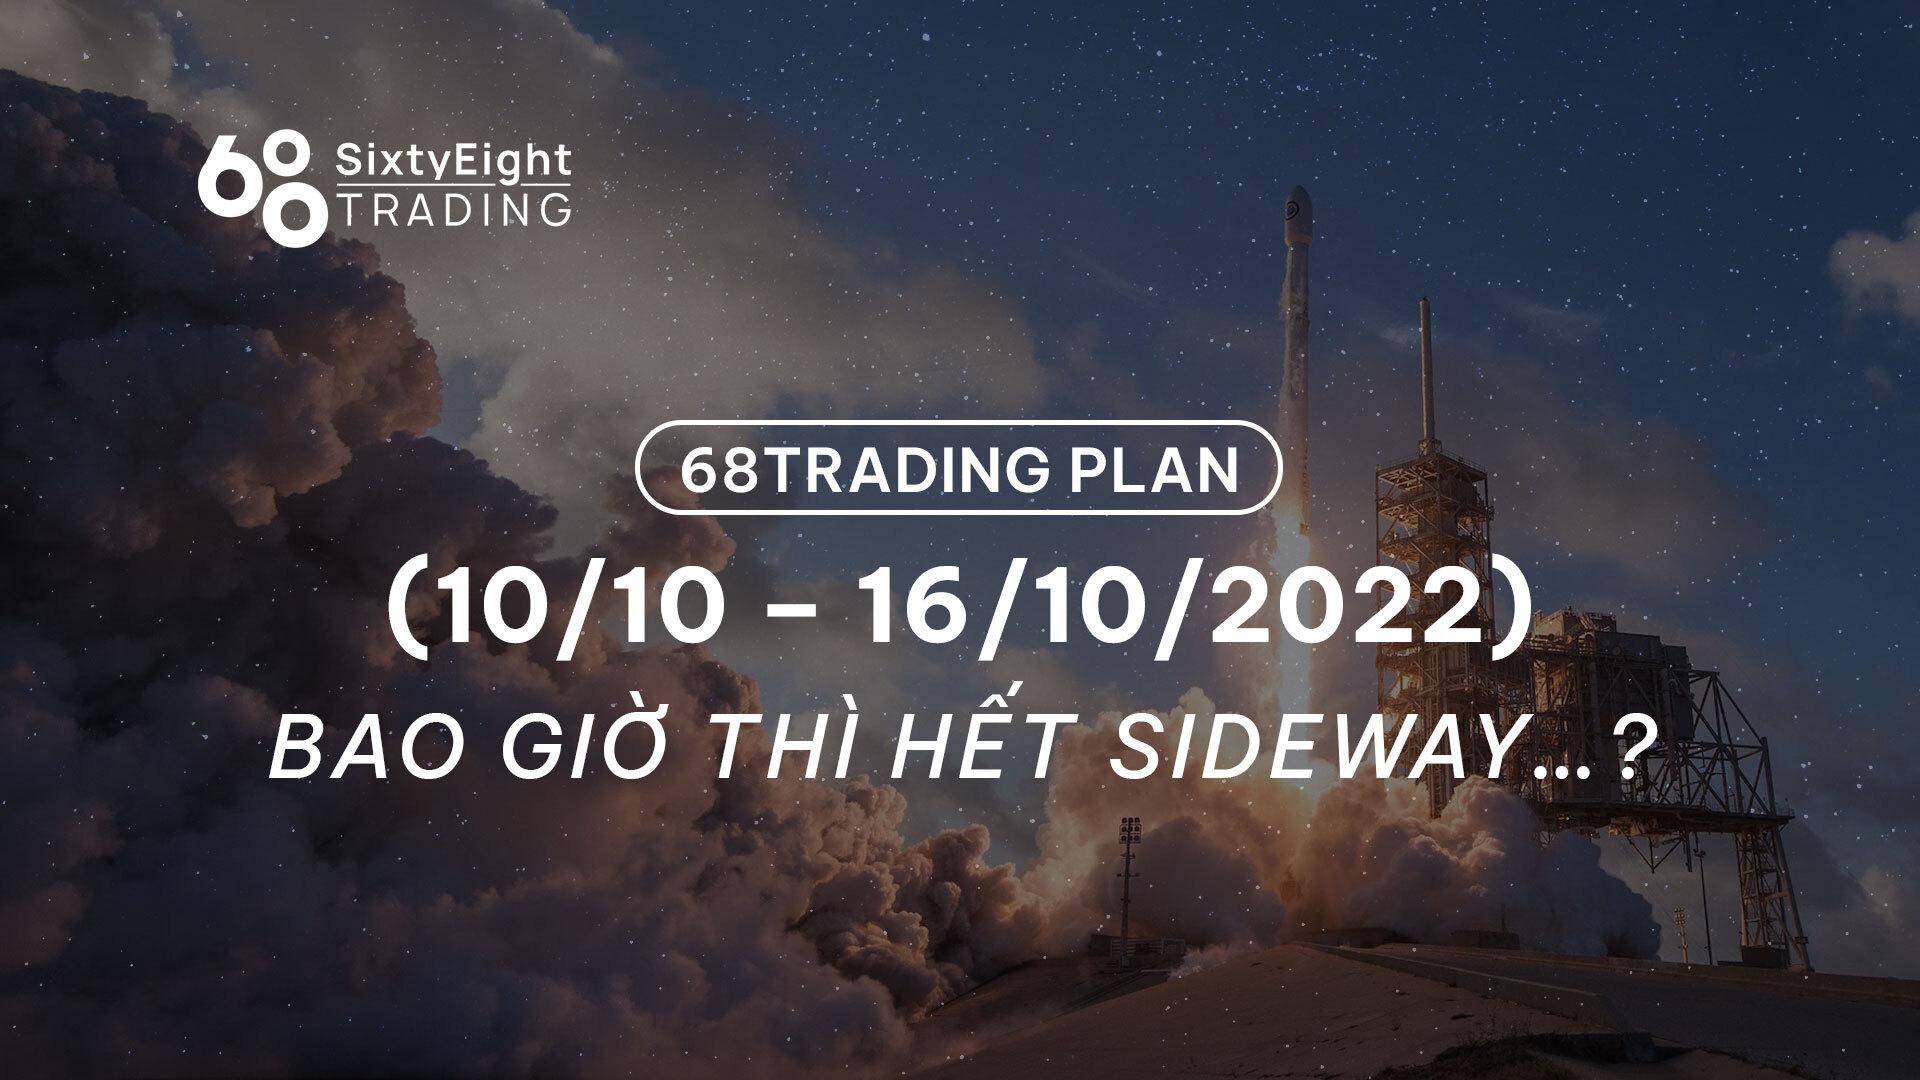 68-trading-plan-1010-16102022-bao-gio-thi-het-sideway